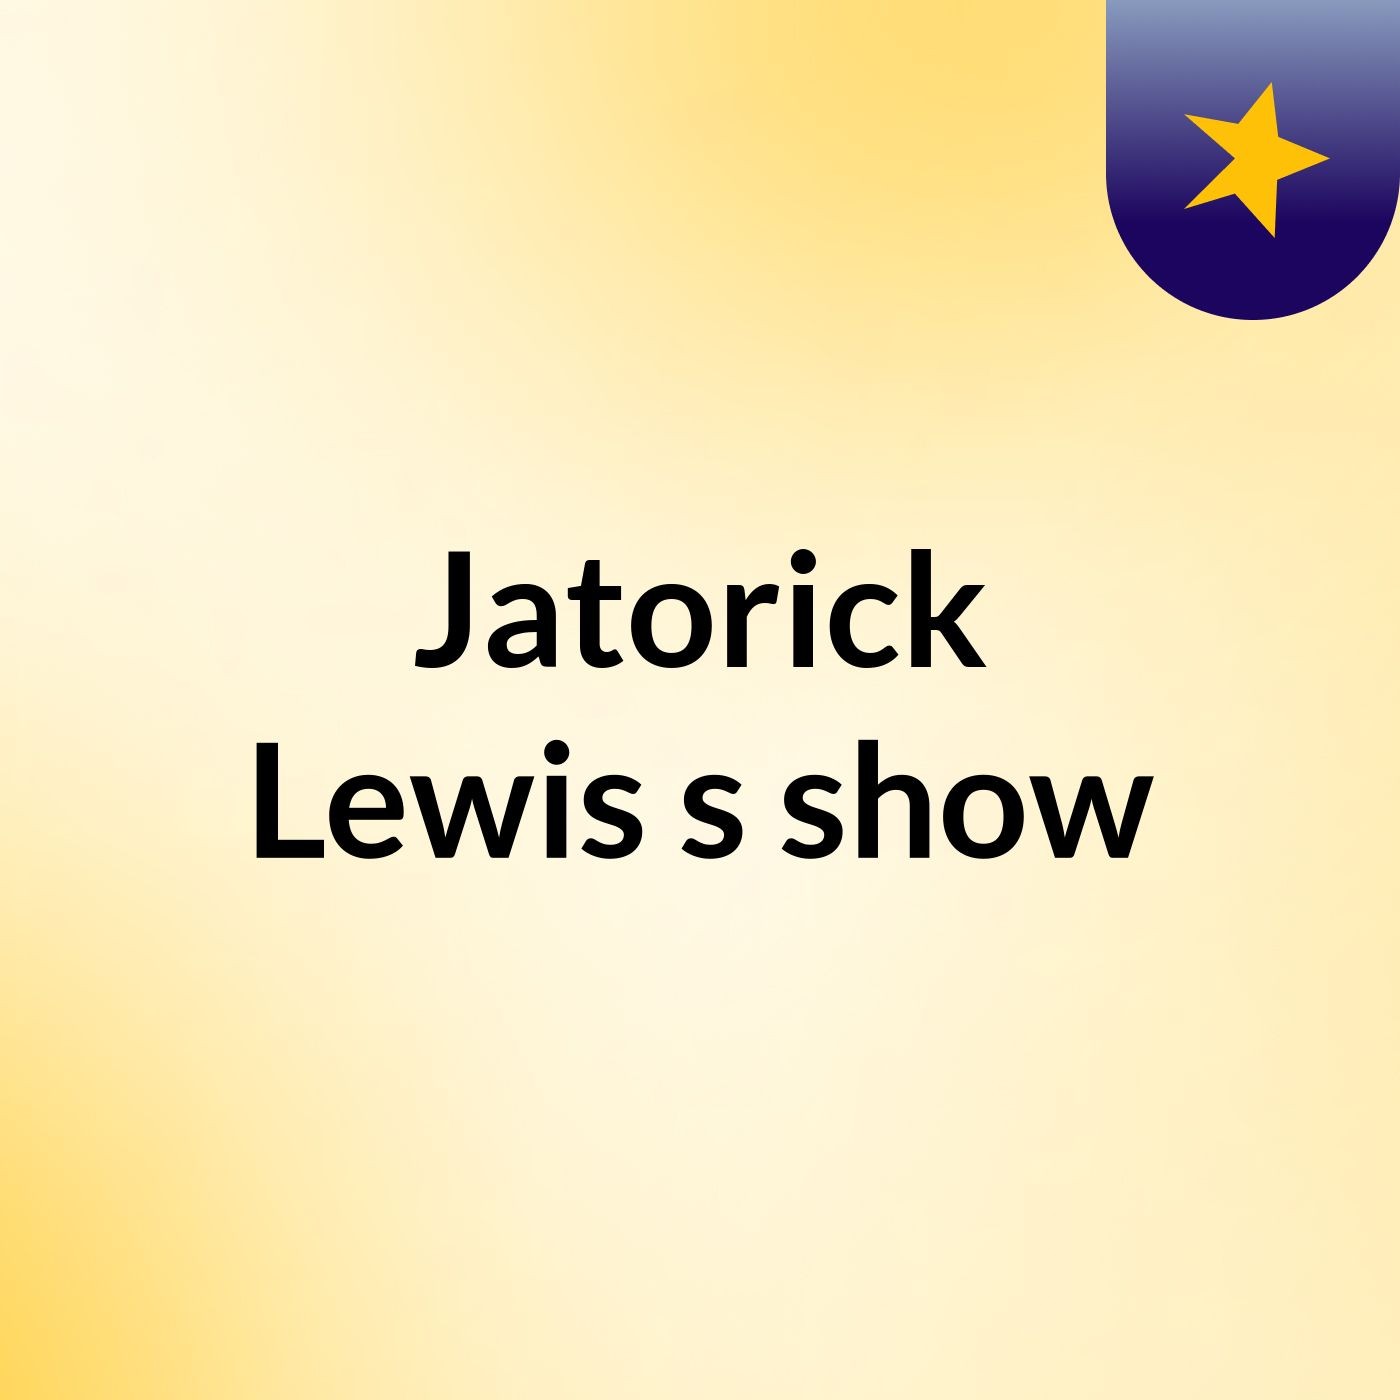 Jatorick Lewis's show